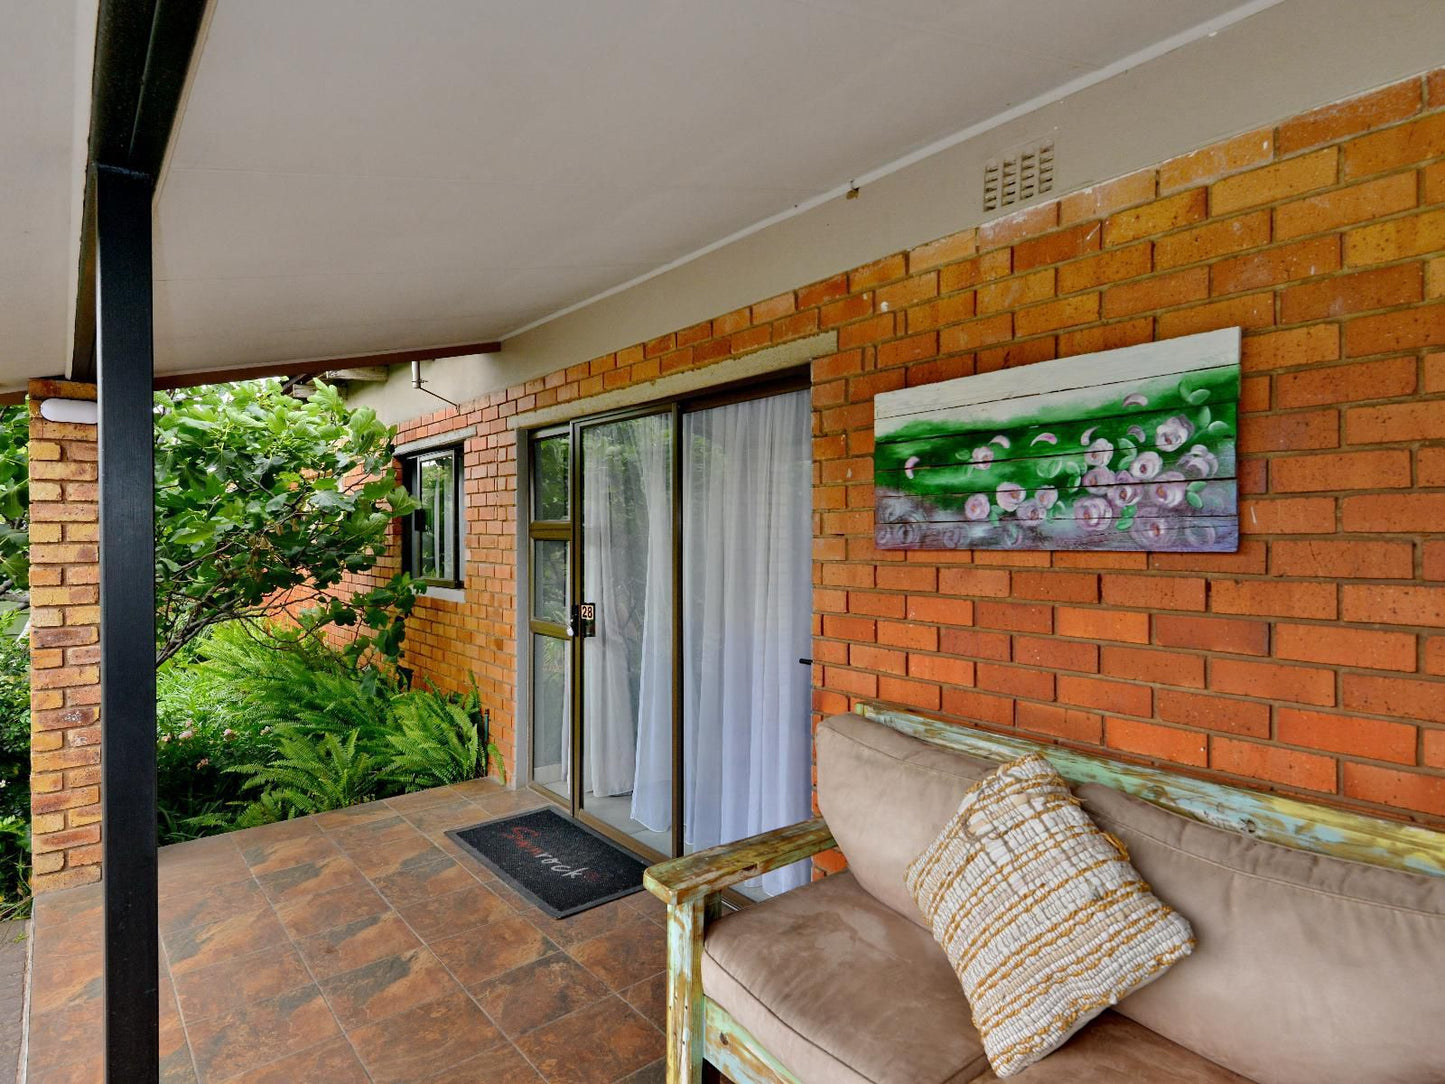 Sunrock Guesthouse Kempton Park Johannesburg Gauteng South Africa House, Building, Architecture, Wall, Brick Texture, Texture, Garden, Nature, Plant, Living Room